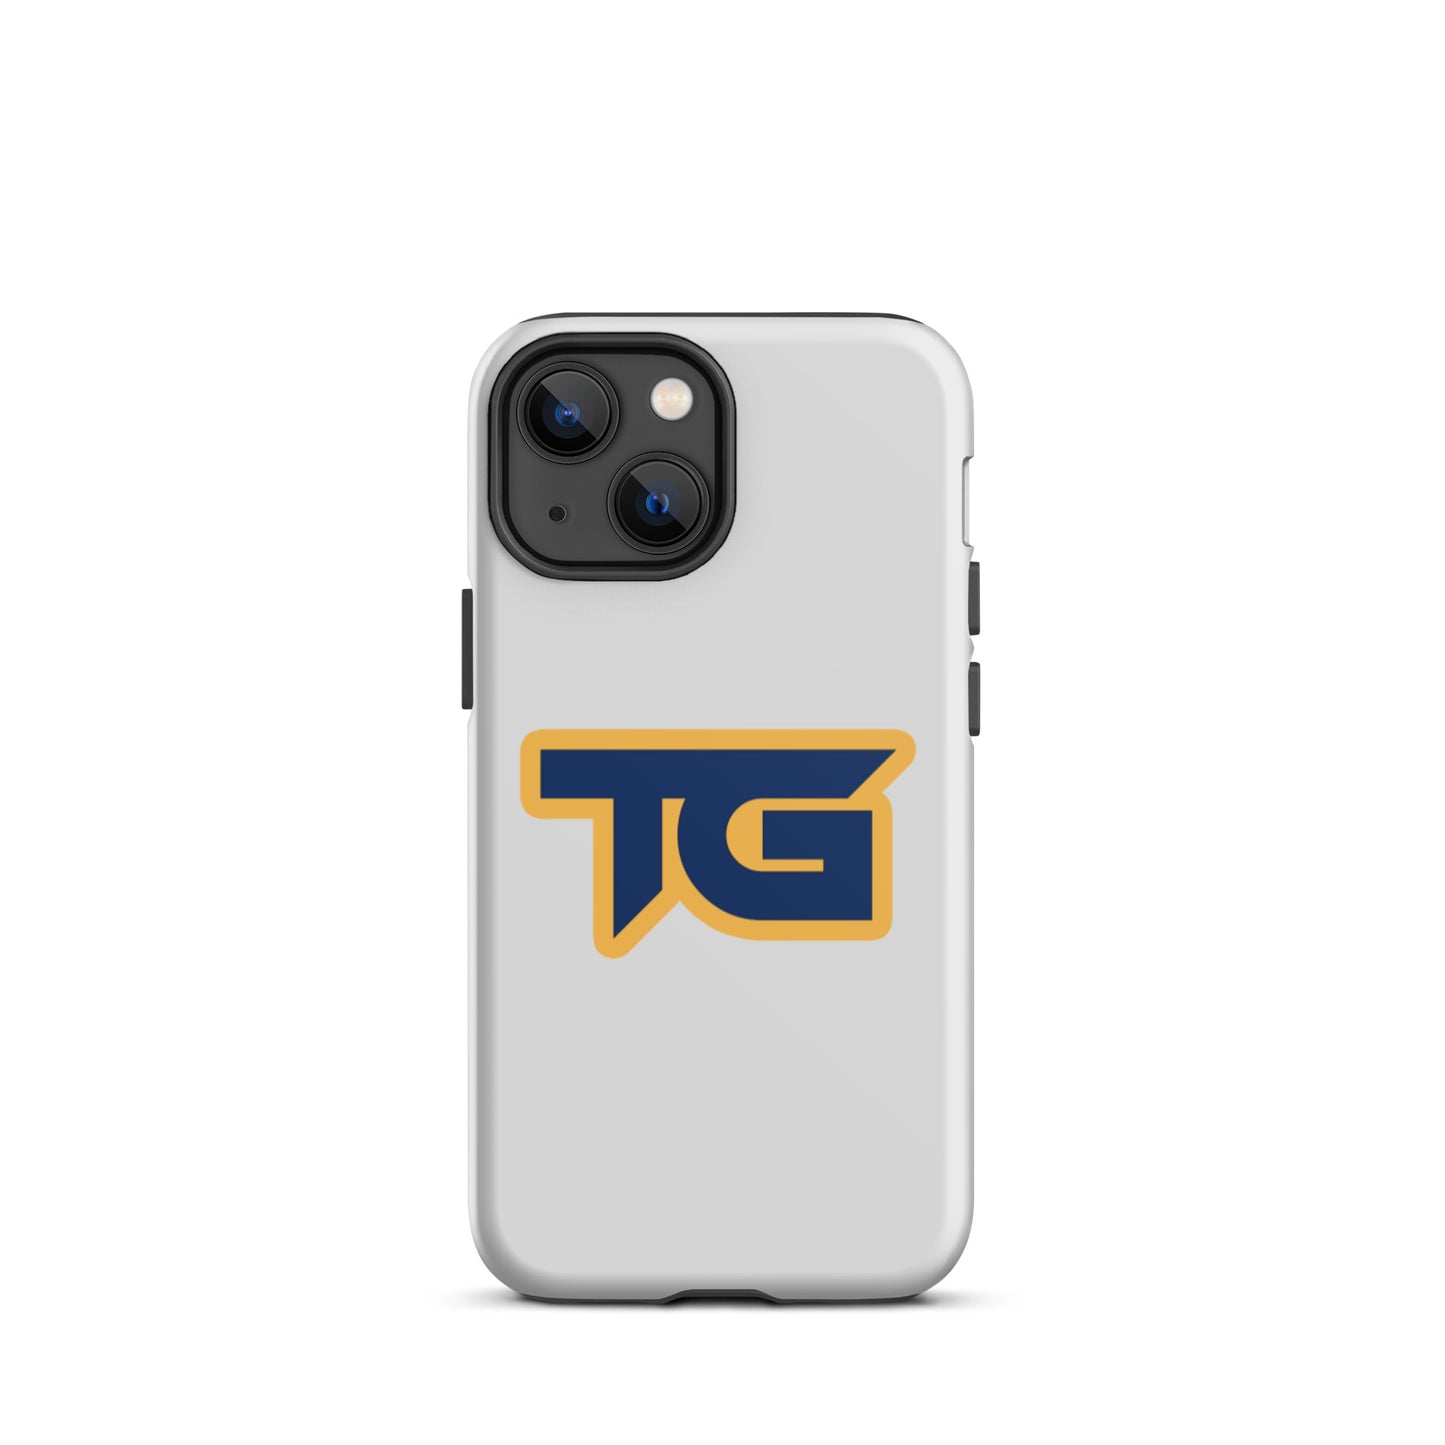 TG Tough iPhone case